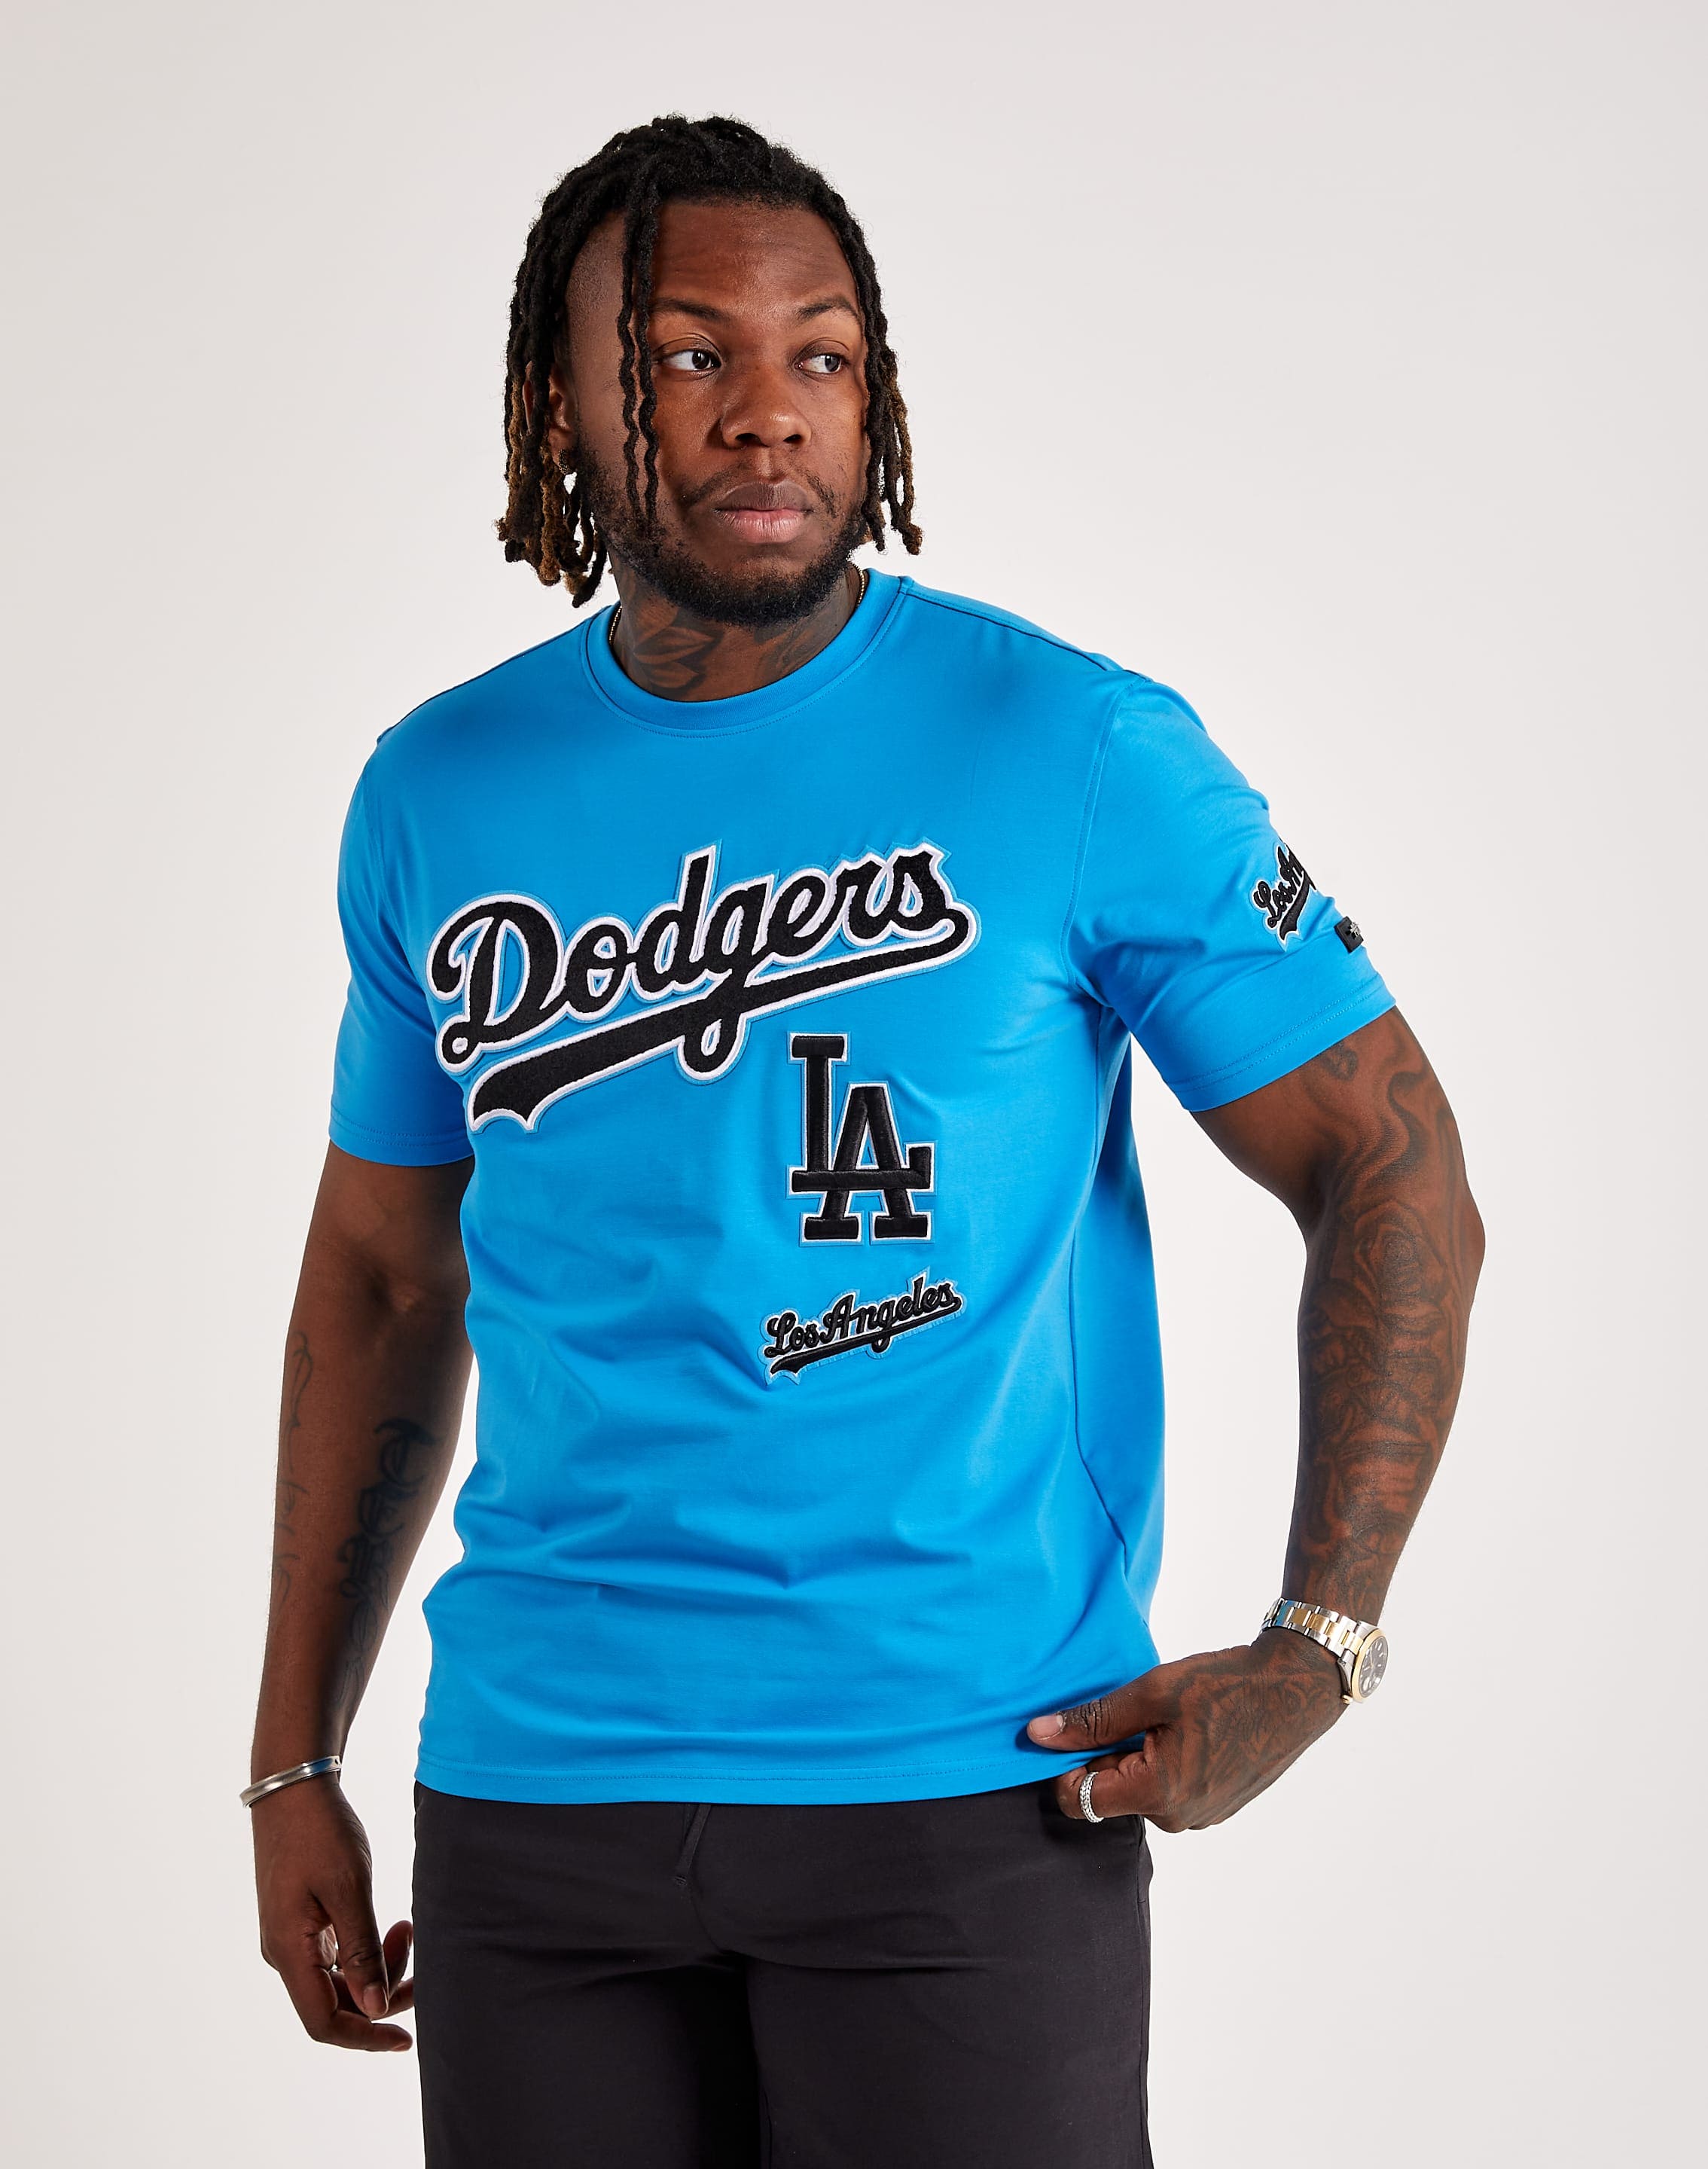 Los Angeles Dodgers Team Shop